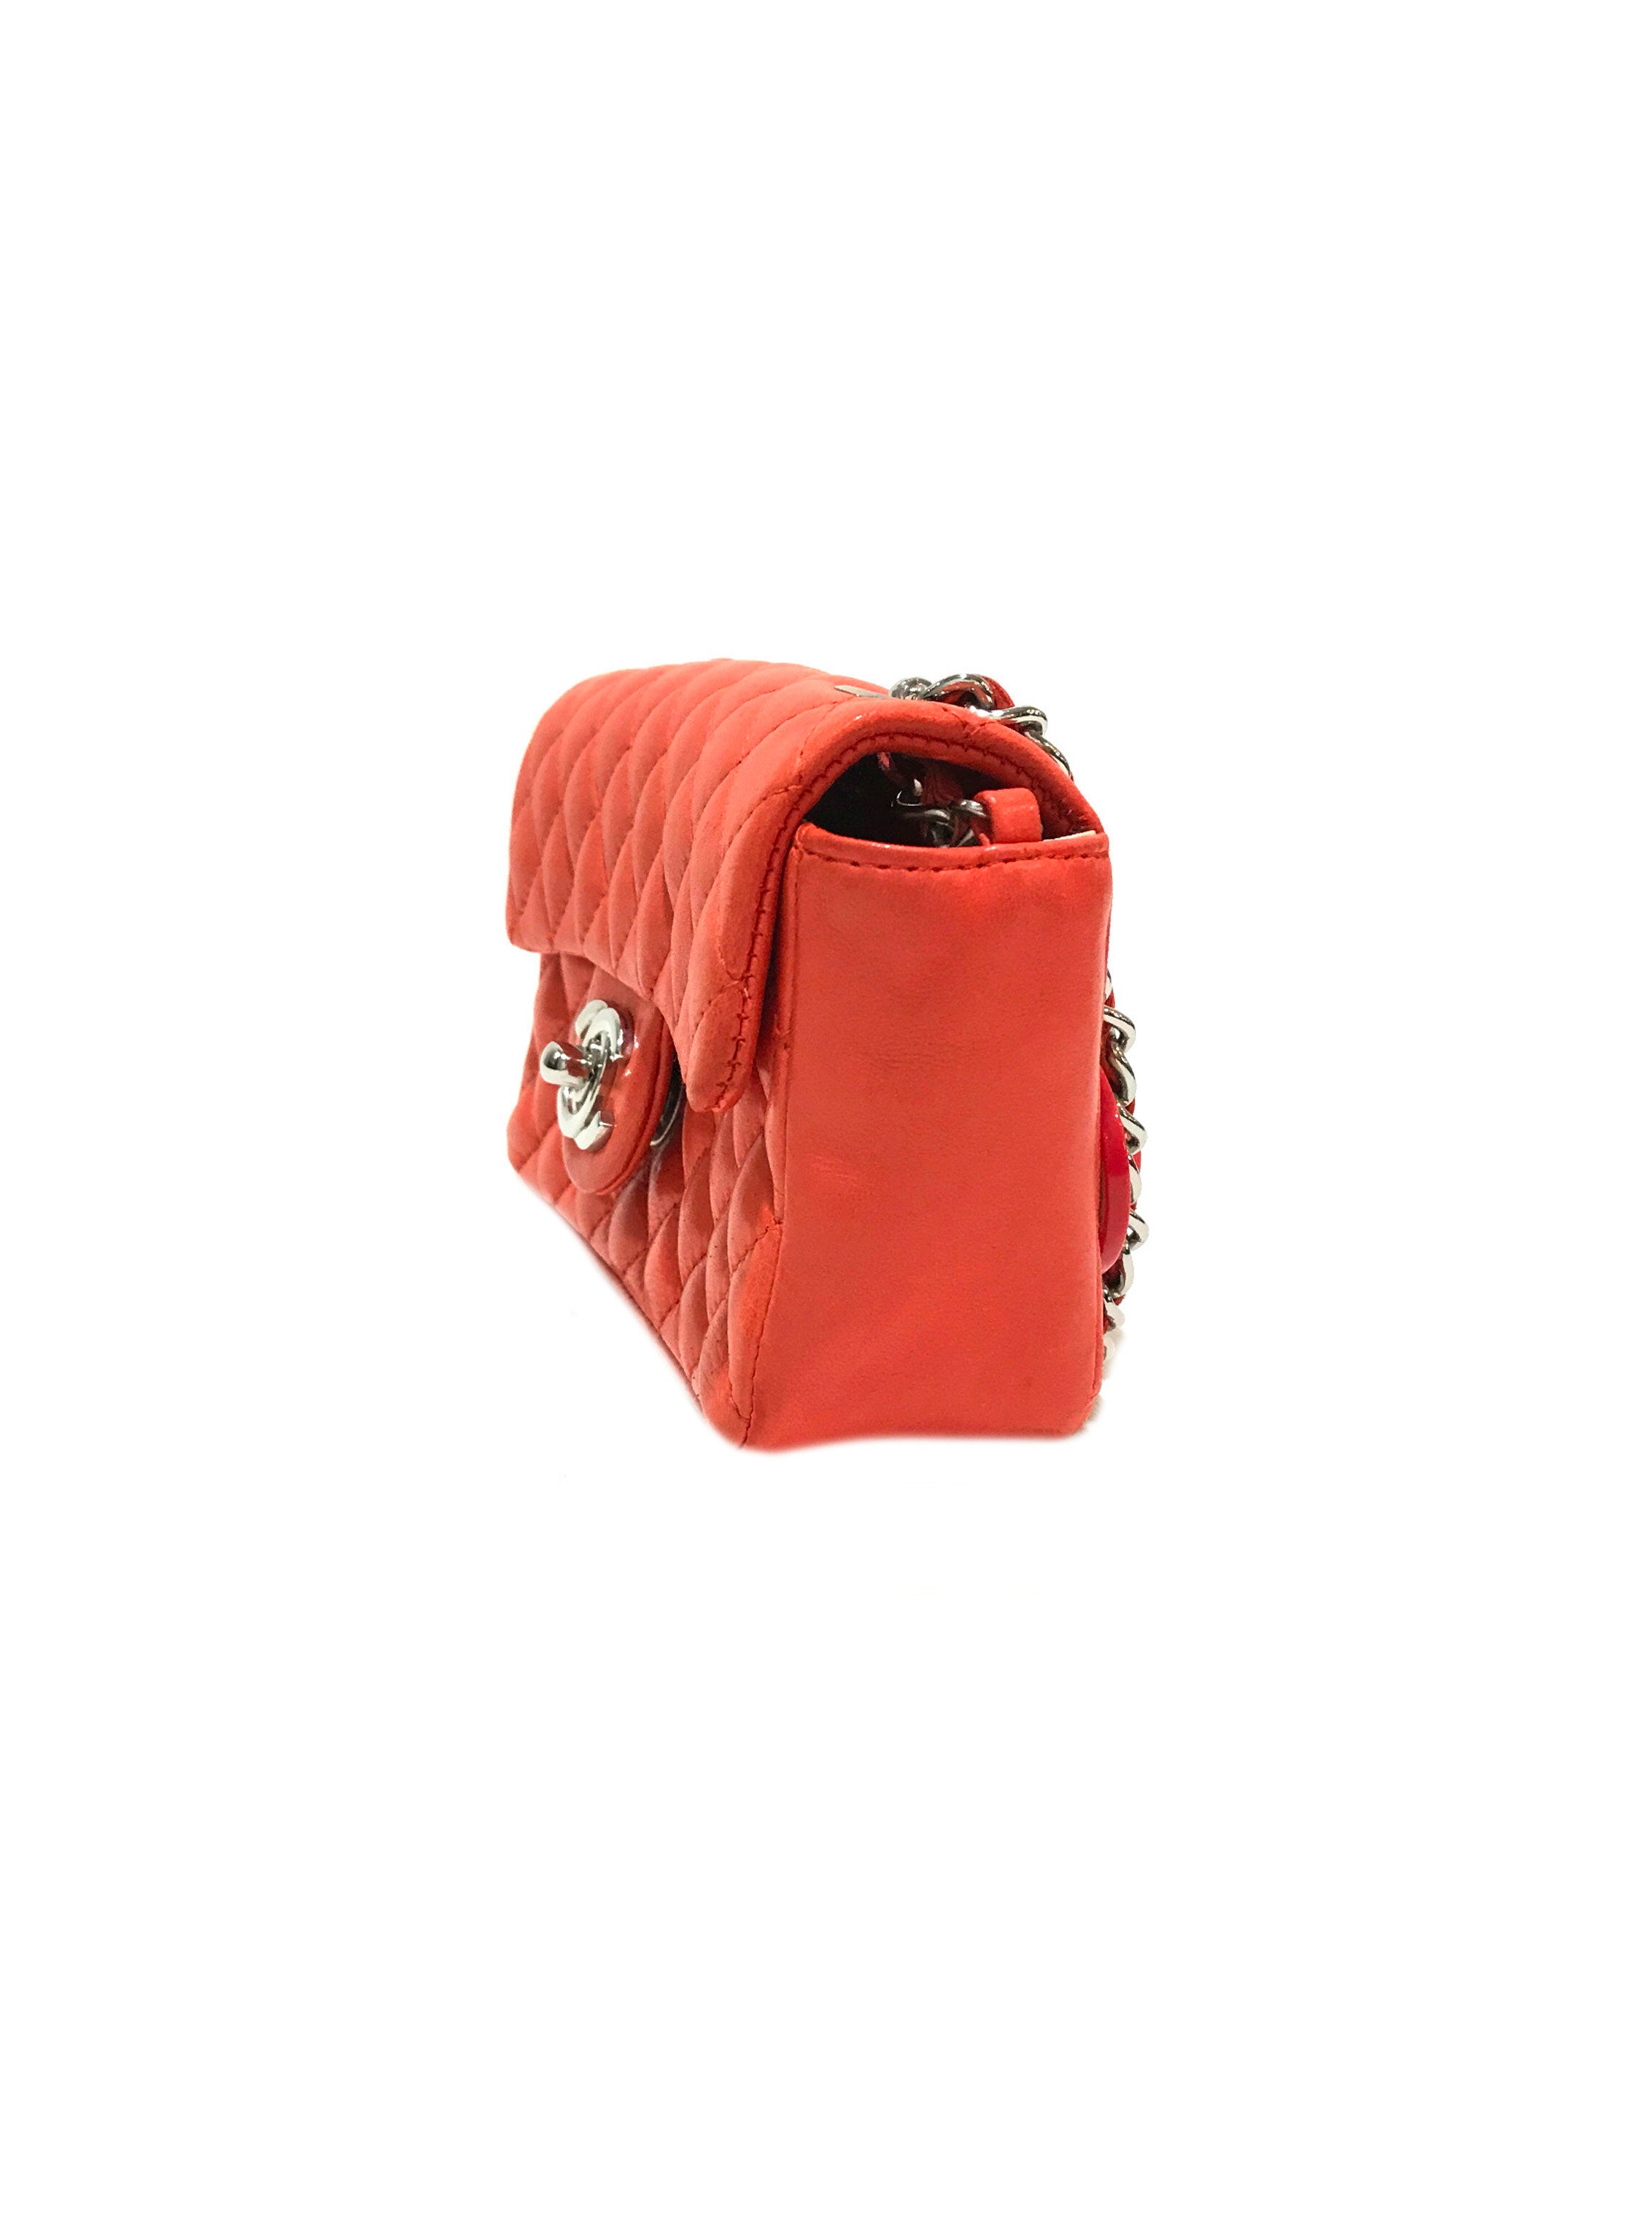 Chanel 2003 Limited Edition Mini Red Ladybug Flap Bag